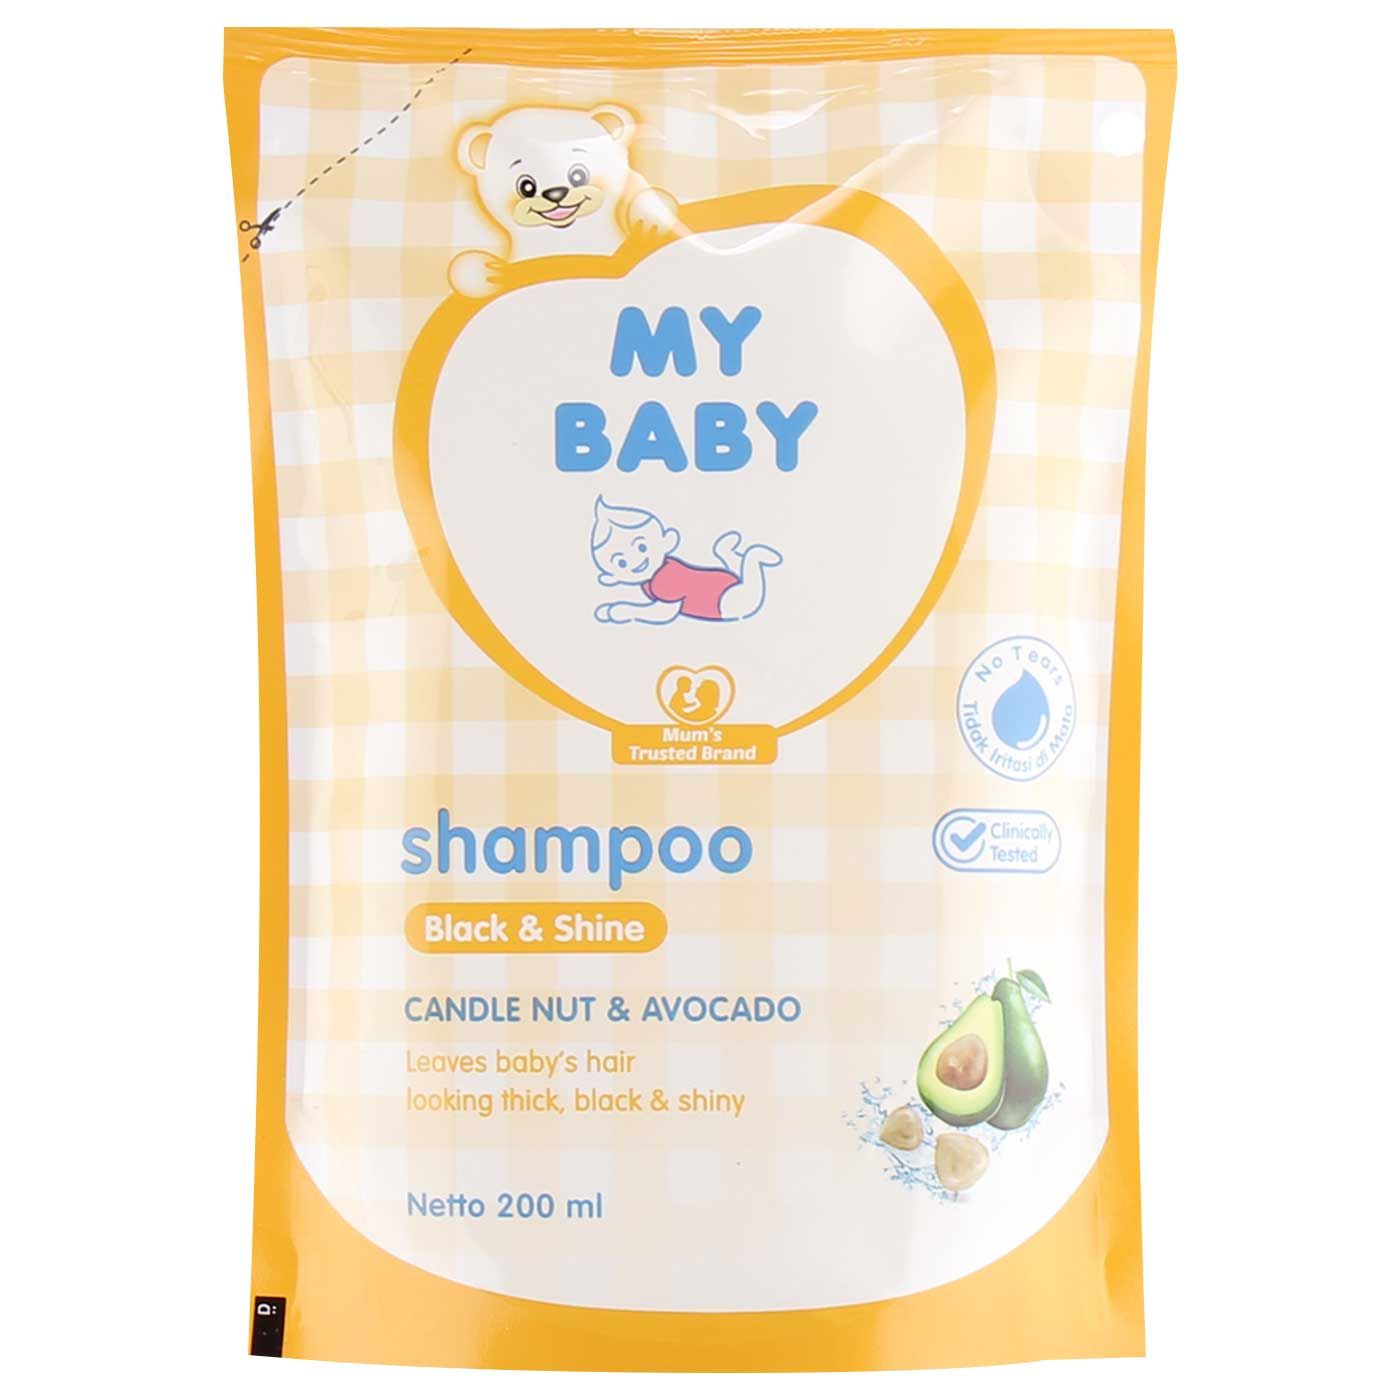 My Baby Shampoo Black & Shine Refill 200ml - 1